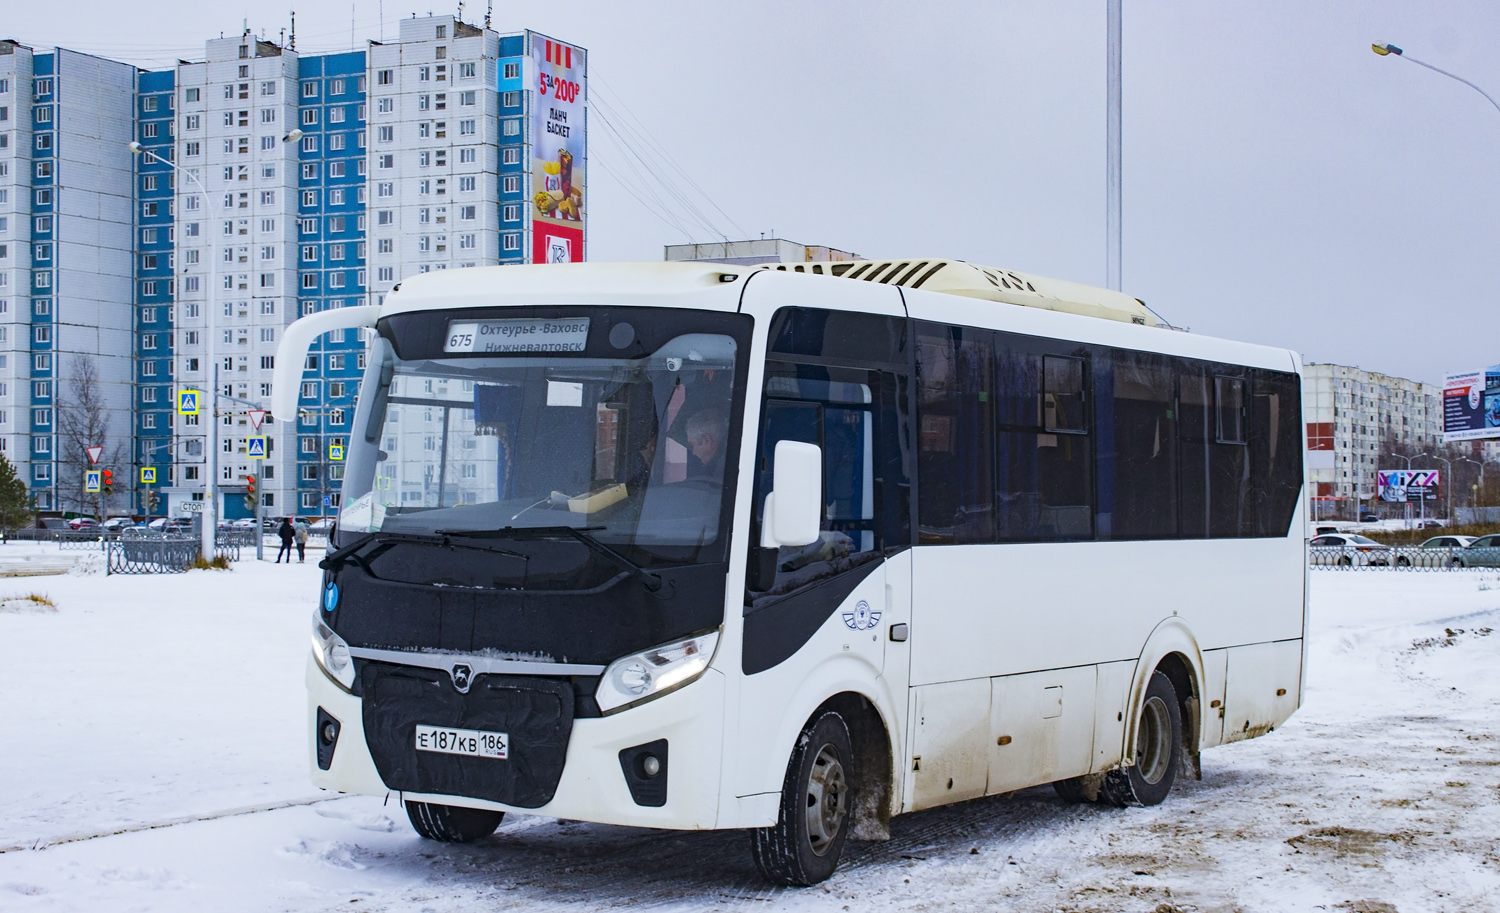 Khanty-Mansi AO, PAZ-320405-04 "Vector Next" (intercity) № Е 187 КВ 186